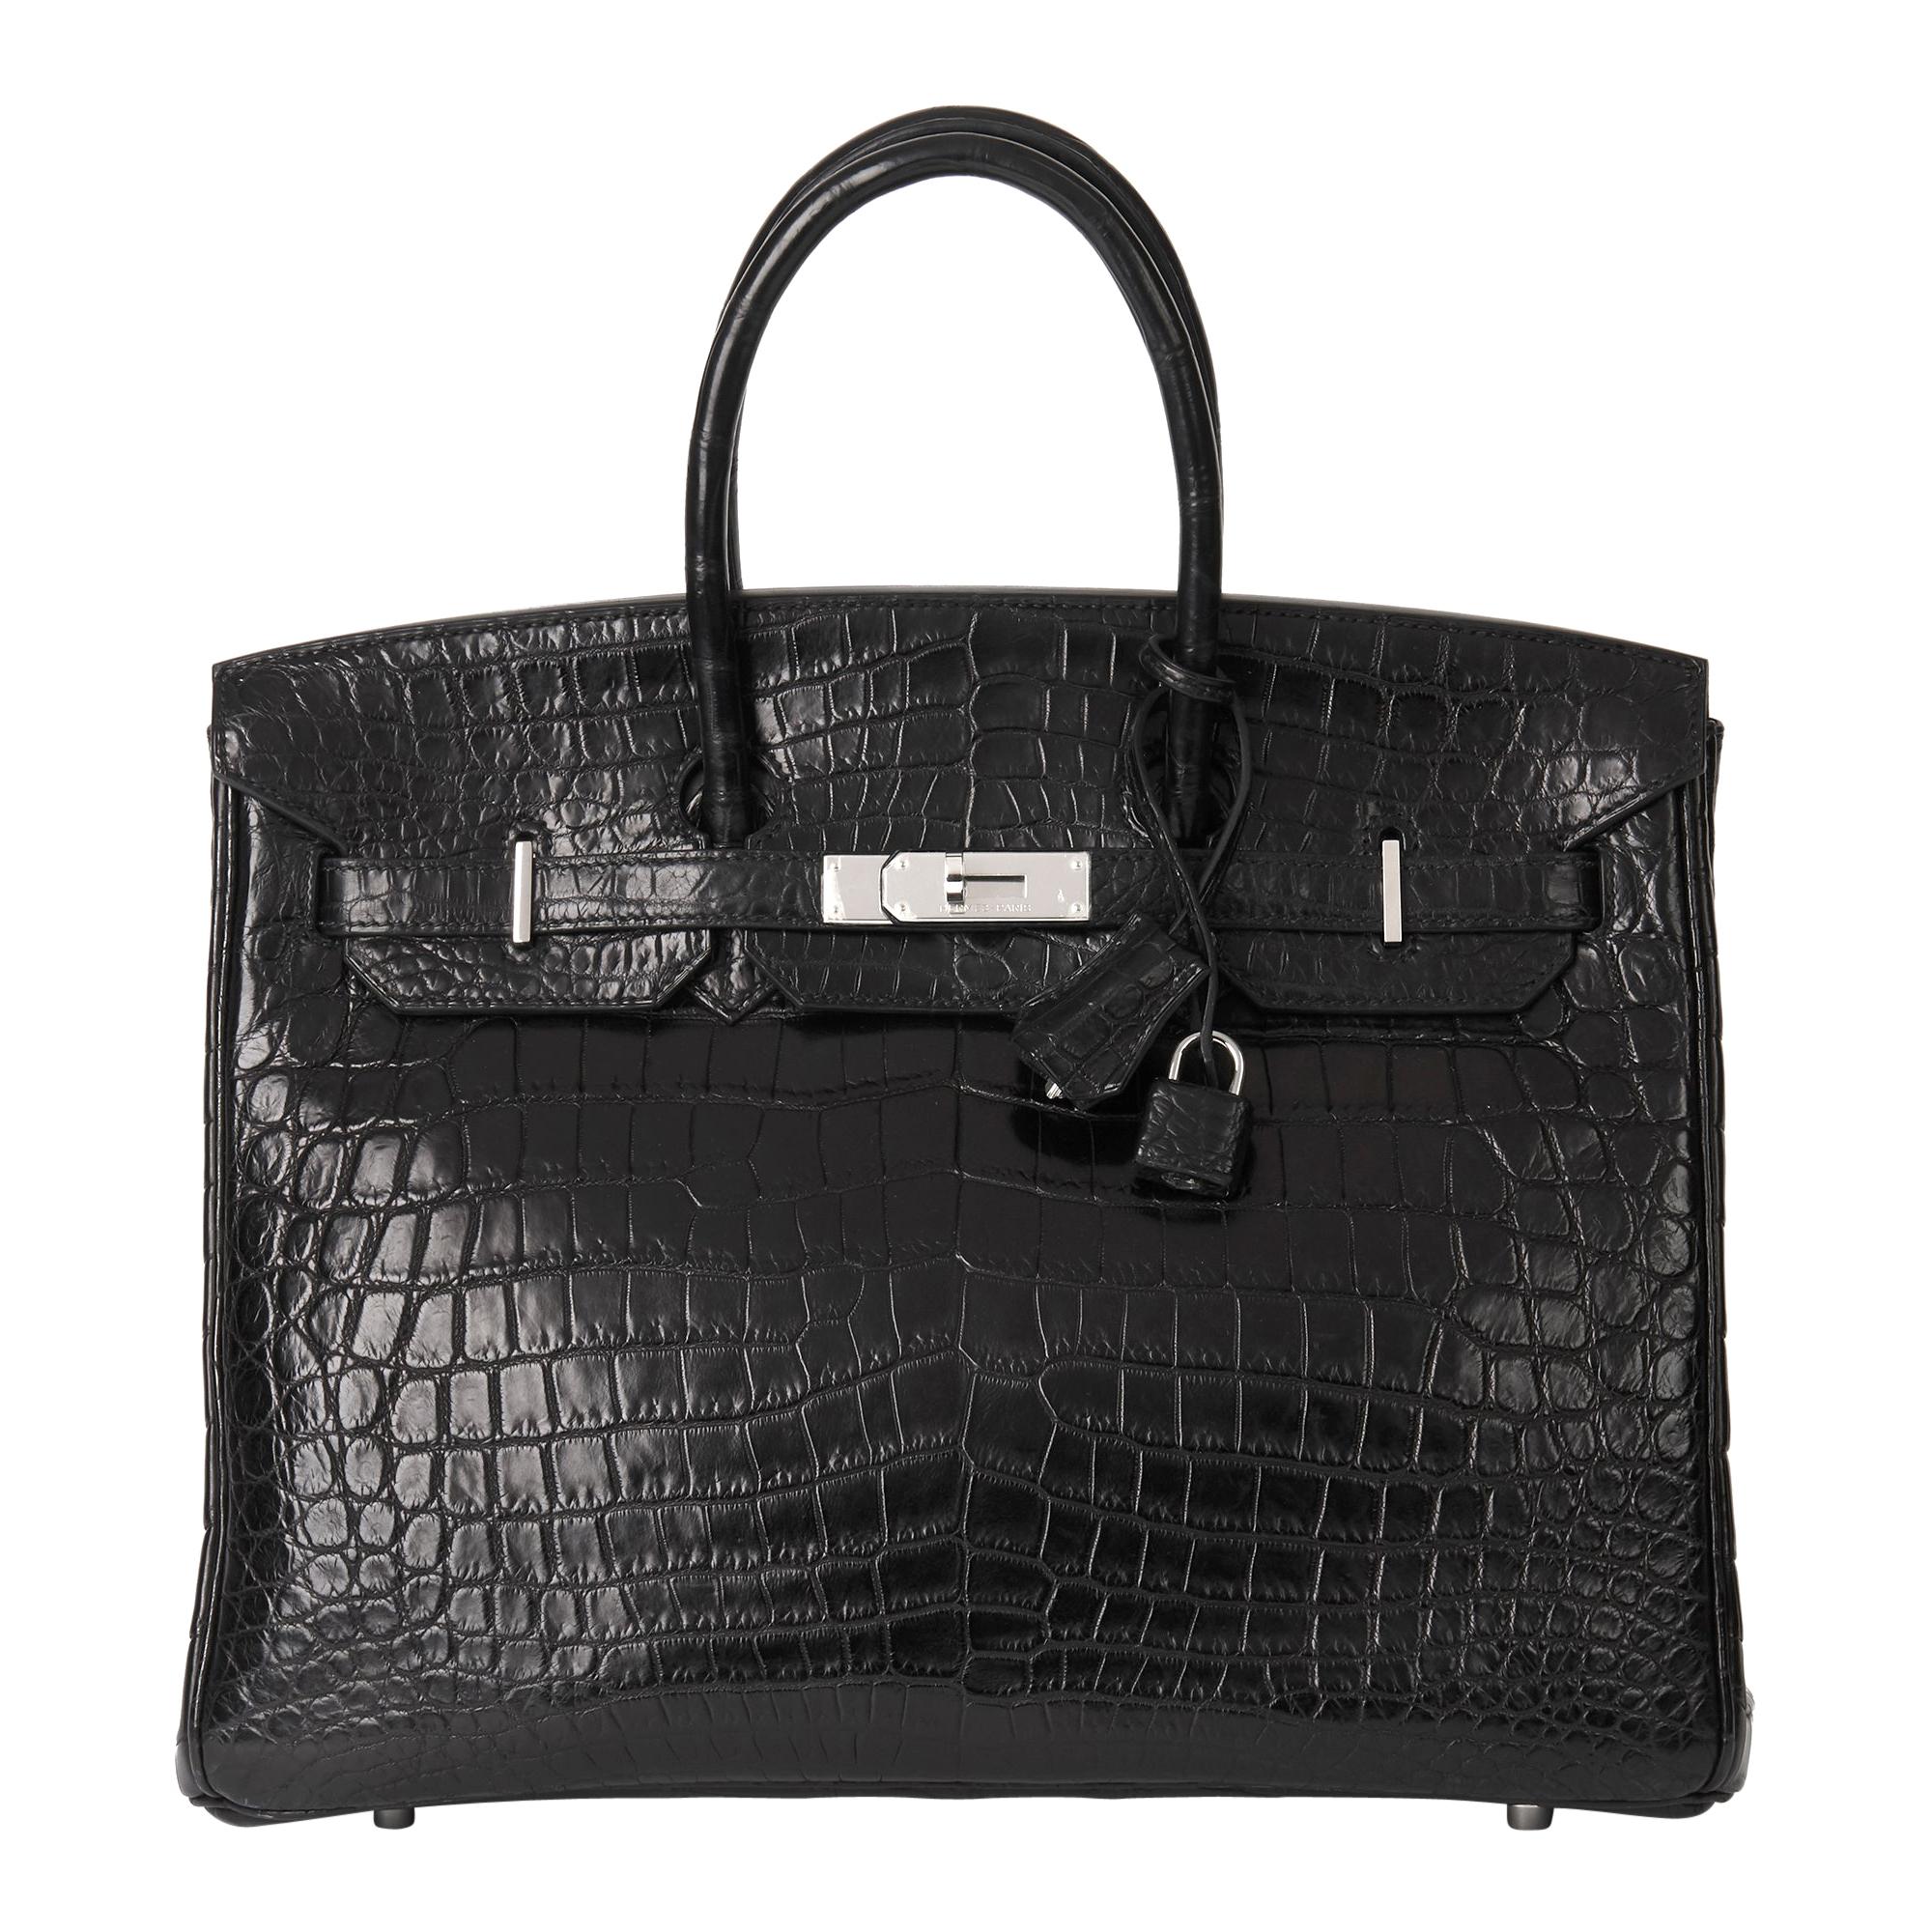 2010 Hermès Black Matte Crocodile Alligator Leather Birkin 35cm